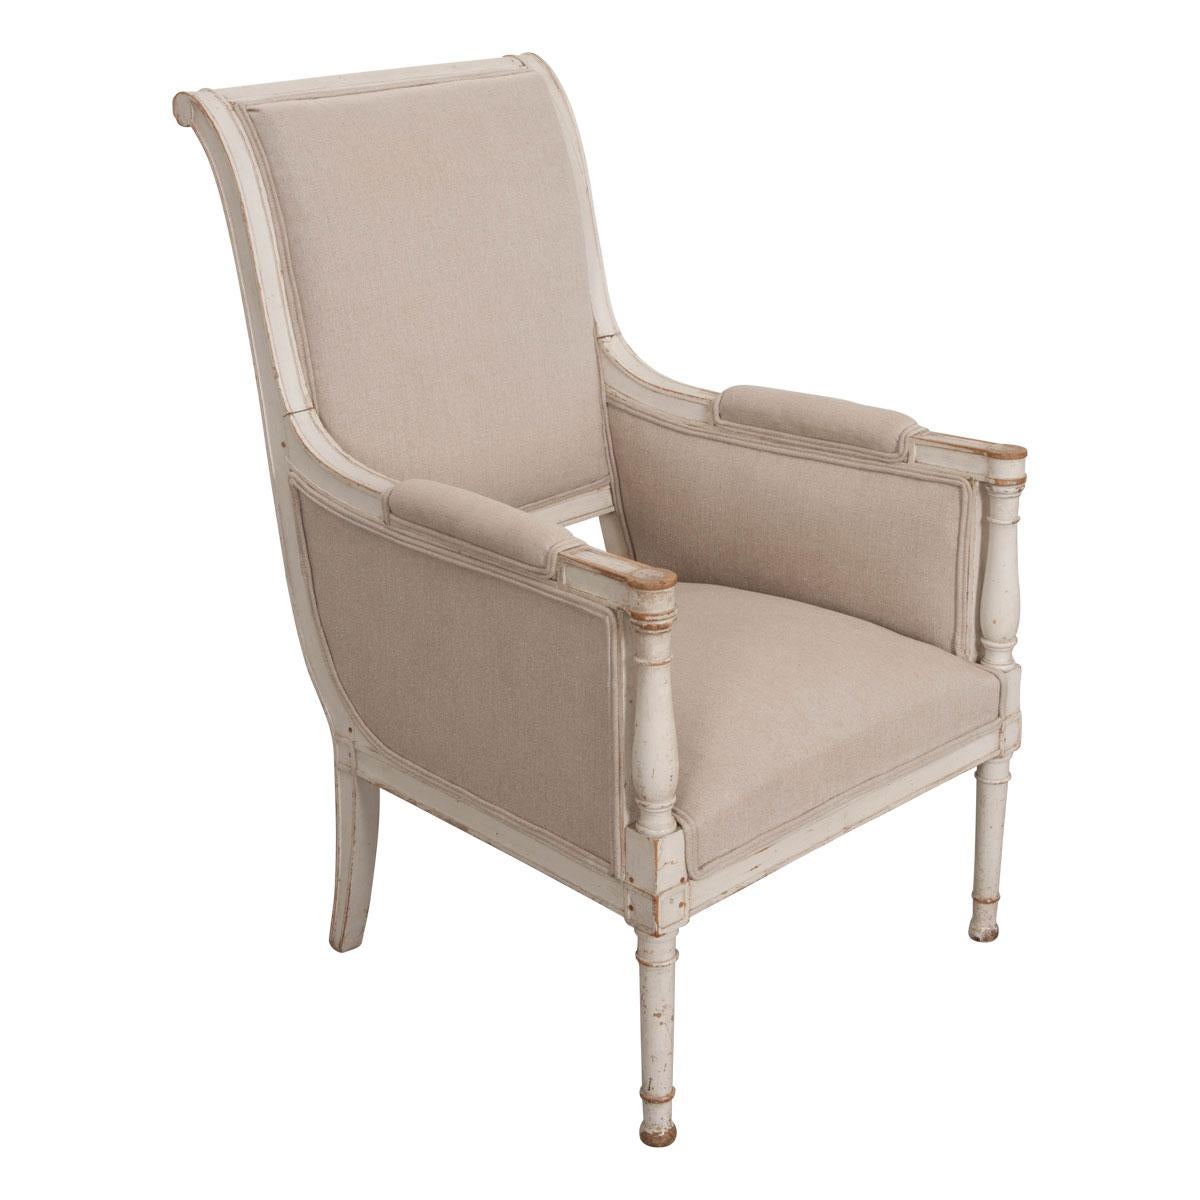 Swedish 19th Century Upholstered Chair